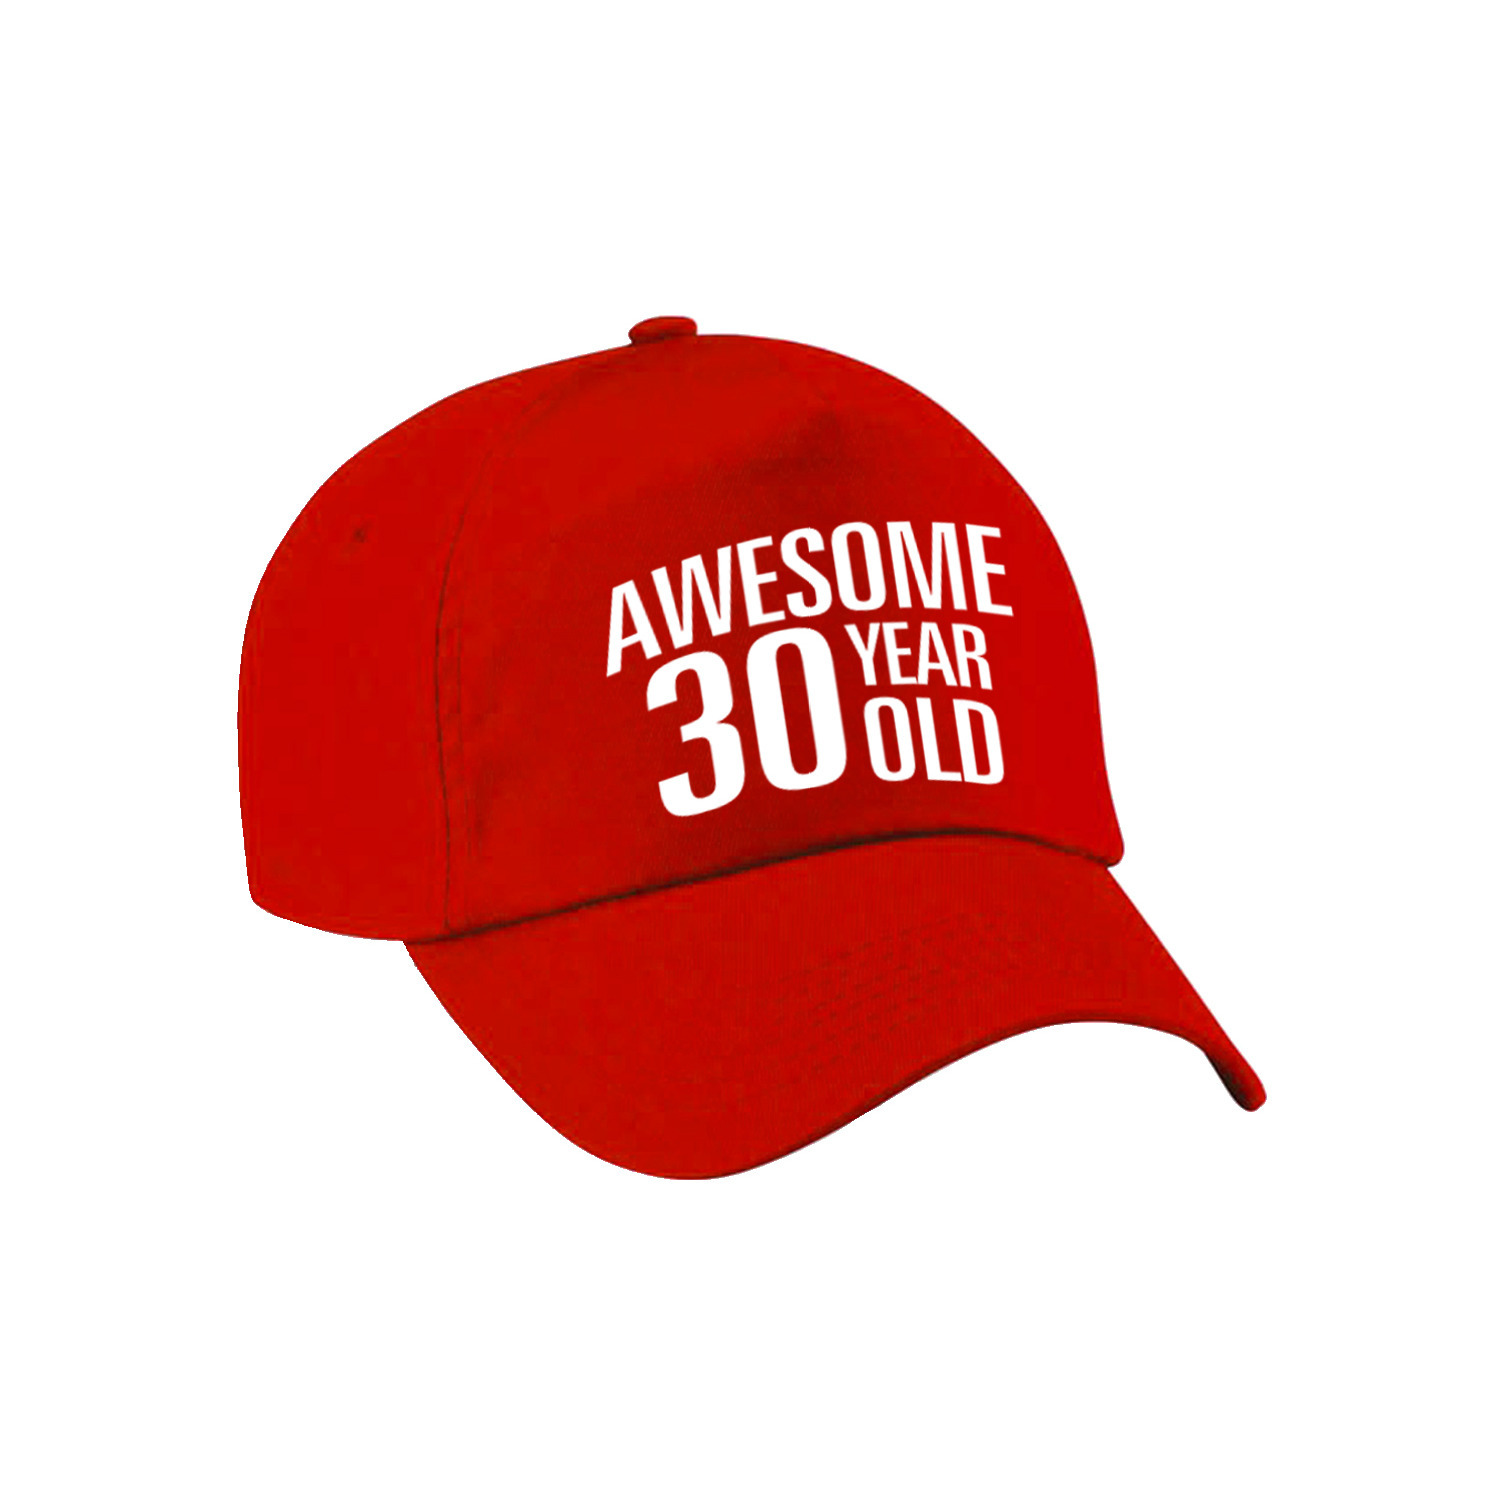 Awesome 30 year old verjaardag pet-cap rood voor dames en heren